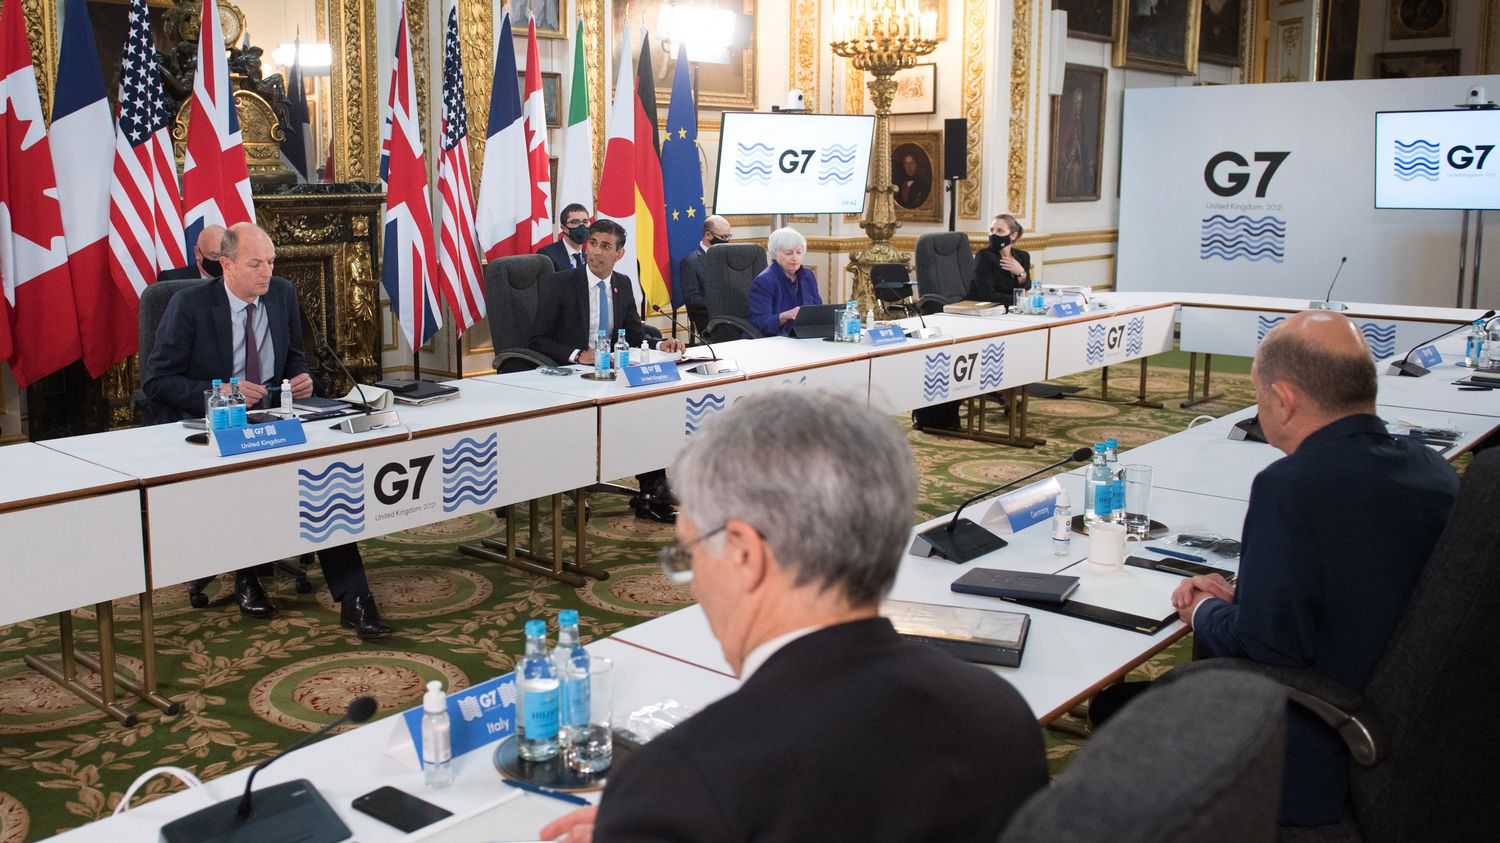 G7 votes on historic agreement on minimum corporate tax rate